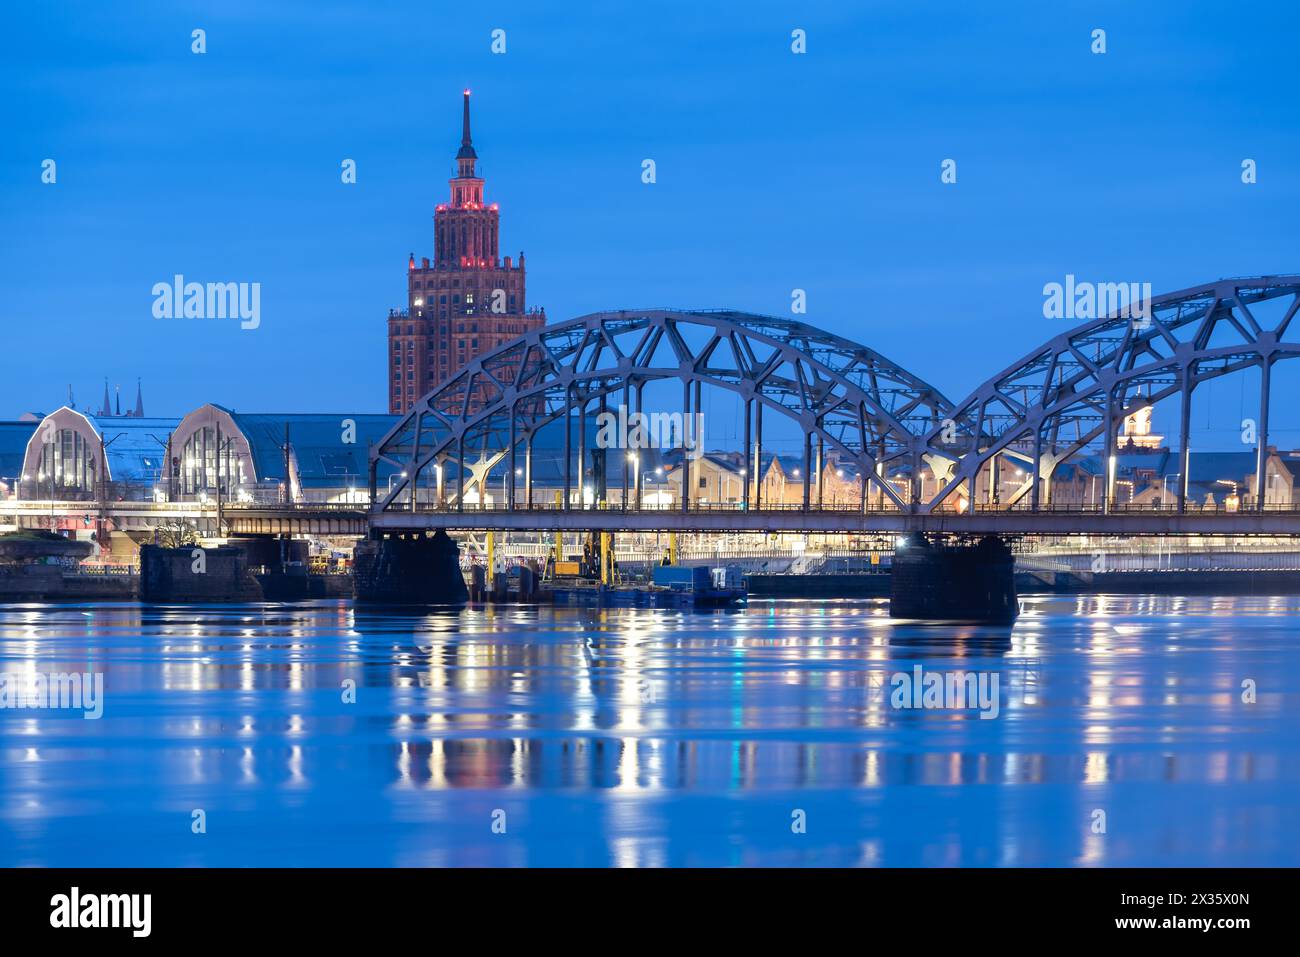 Academy of Sciences, in front of it central market, railway bridge, leads over the Daugava, Riga, Latvia, Europe Stock Photo